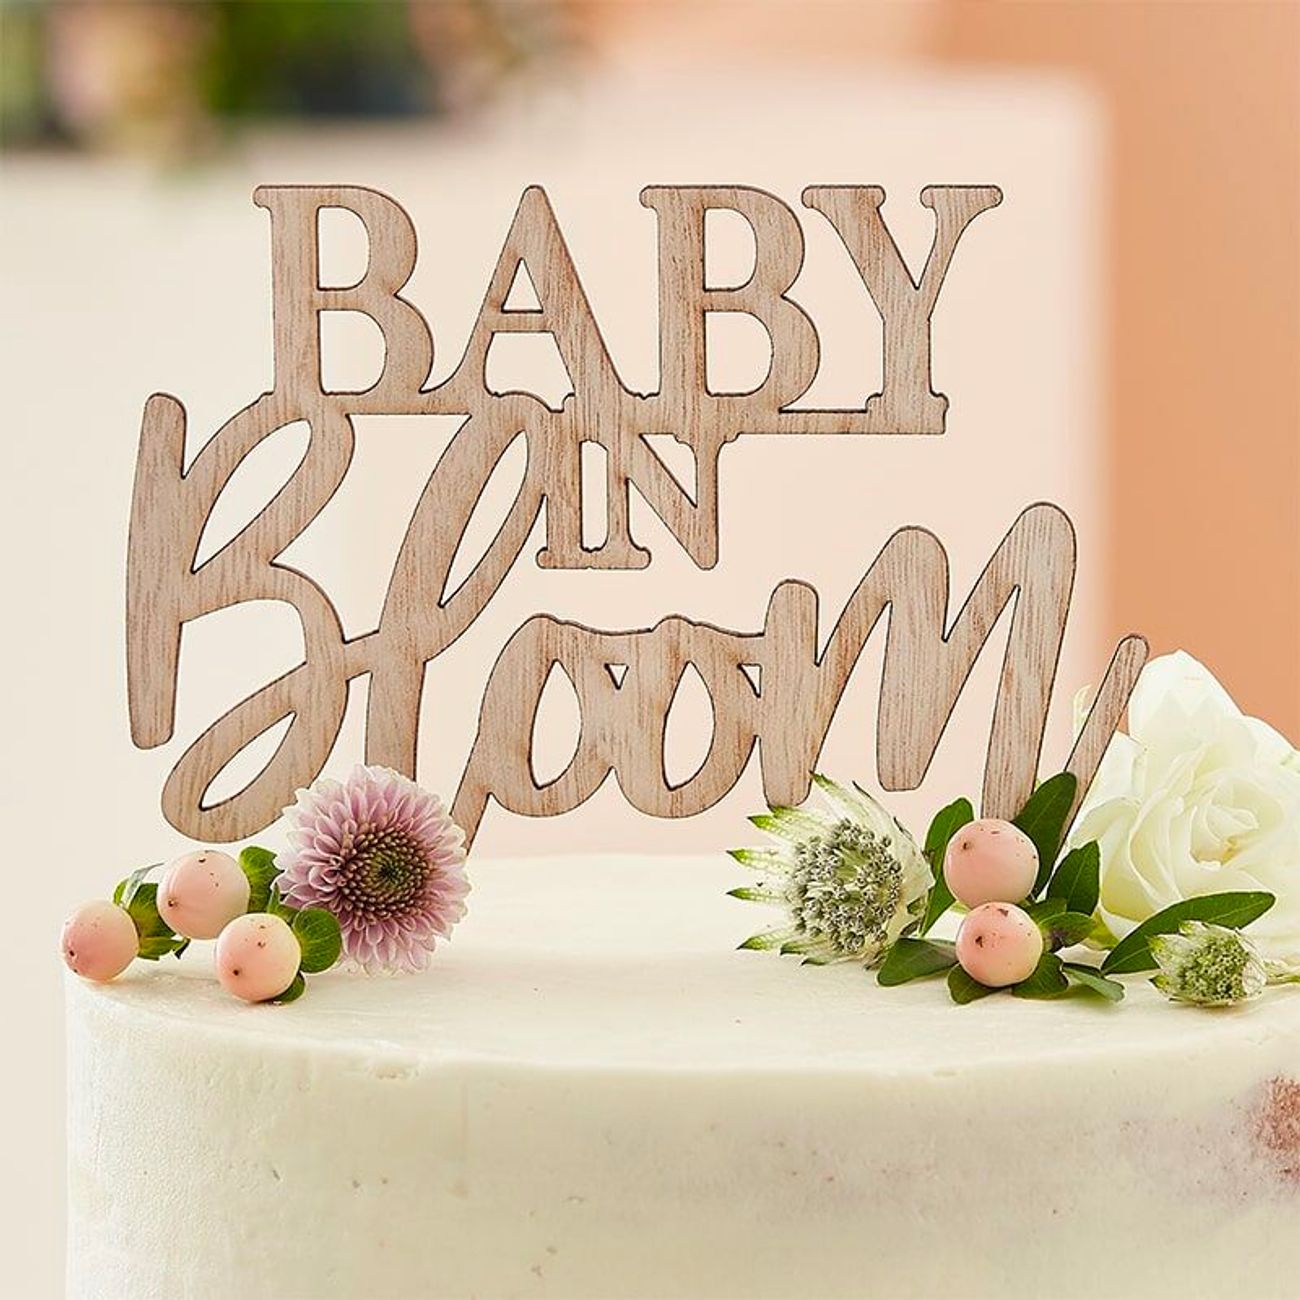 tartdekoration-i-tra-baby-in-bloom-73637-2